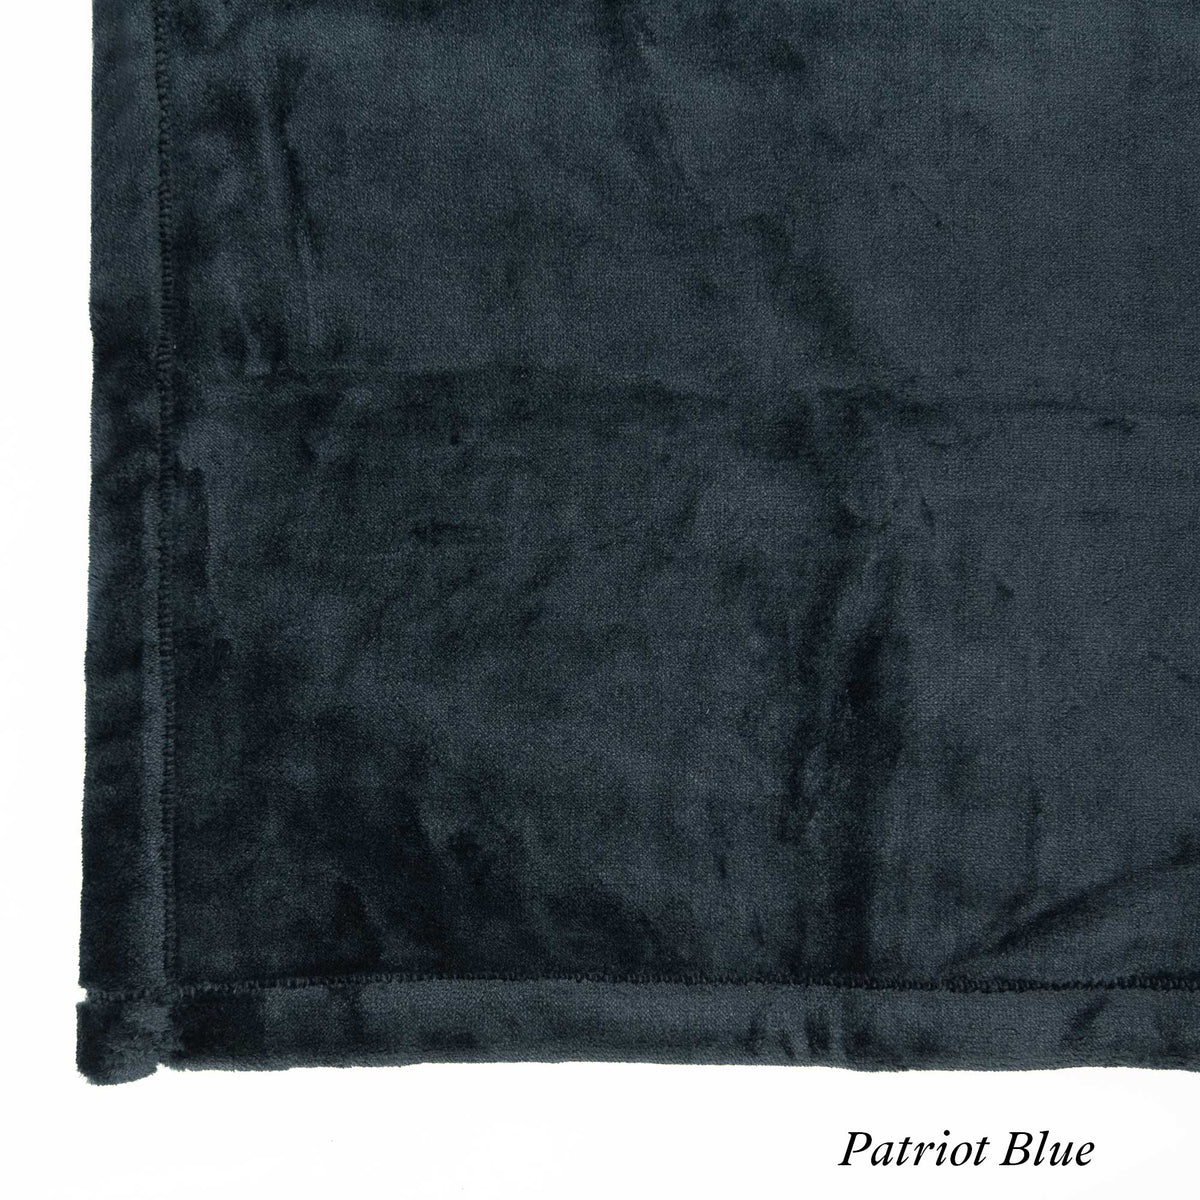 Patriot Blue - The Best Fleece Blankets - Custom Size Luster Loft Fleece Blankets - American Blanket Company